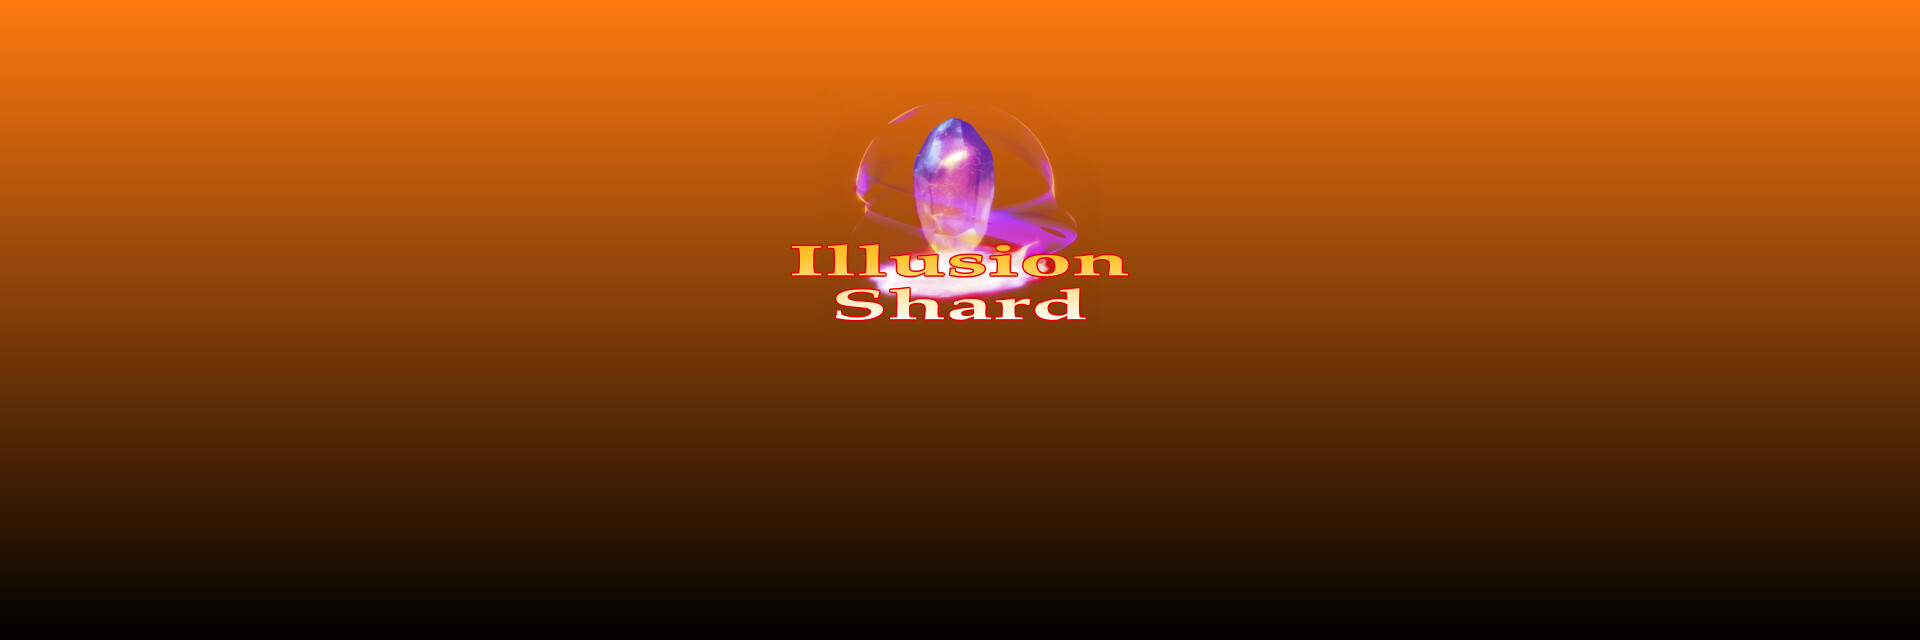 (c) Illusionshard.com